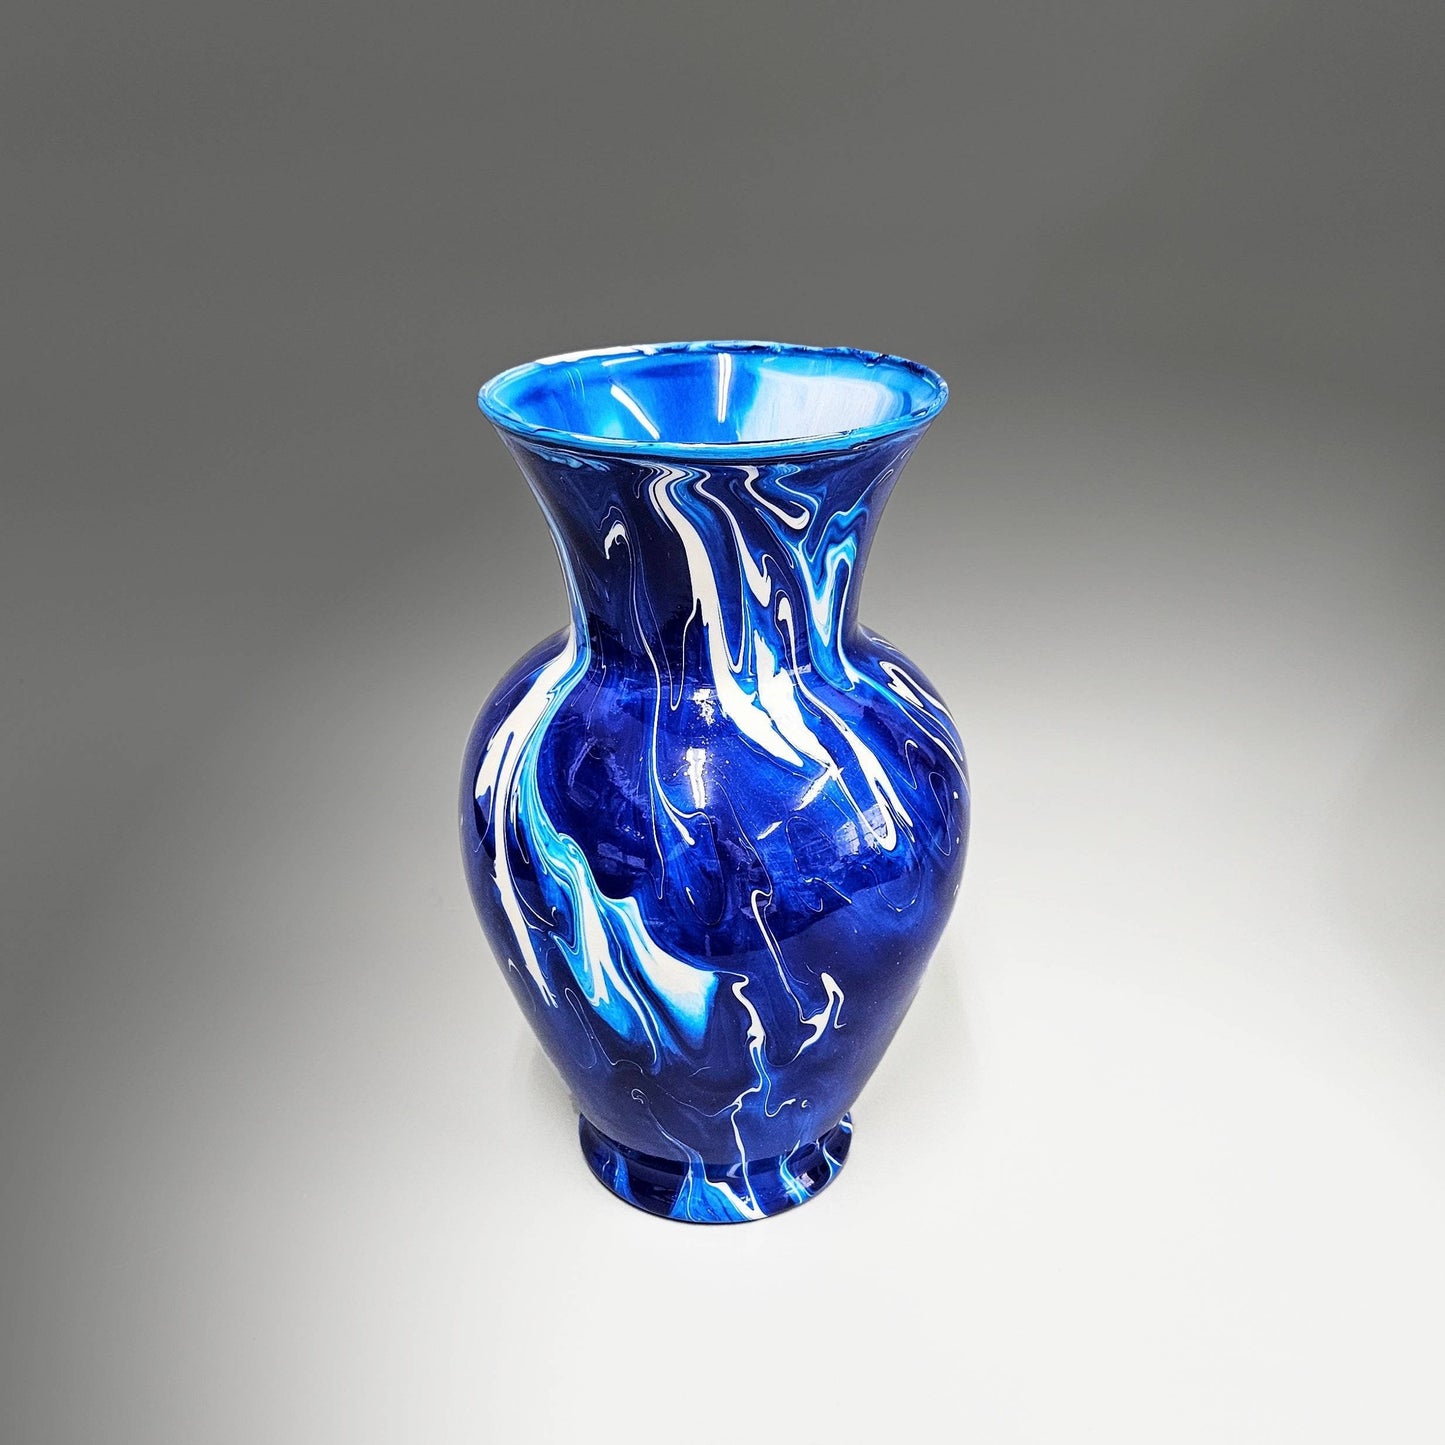 Electric Blue and White Glass Art Vase | Unique Home Décor Gift Ideas